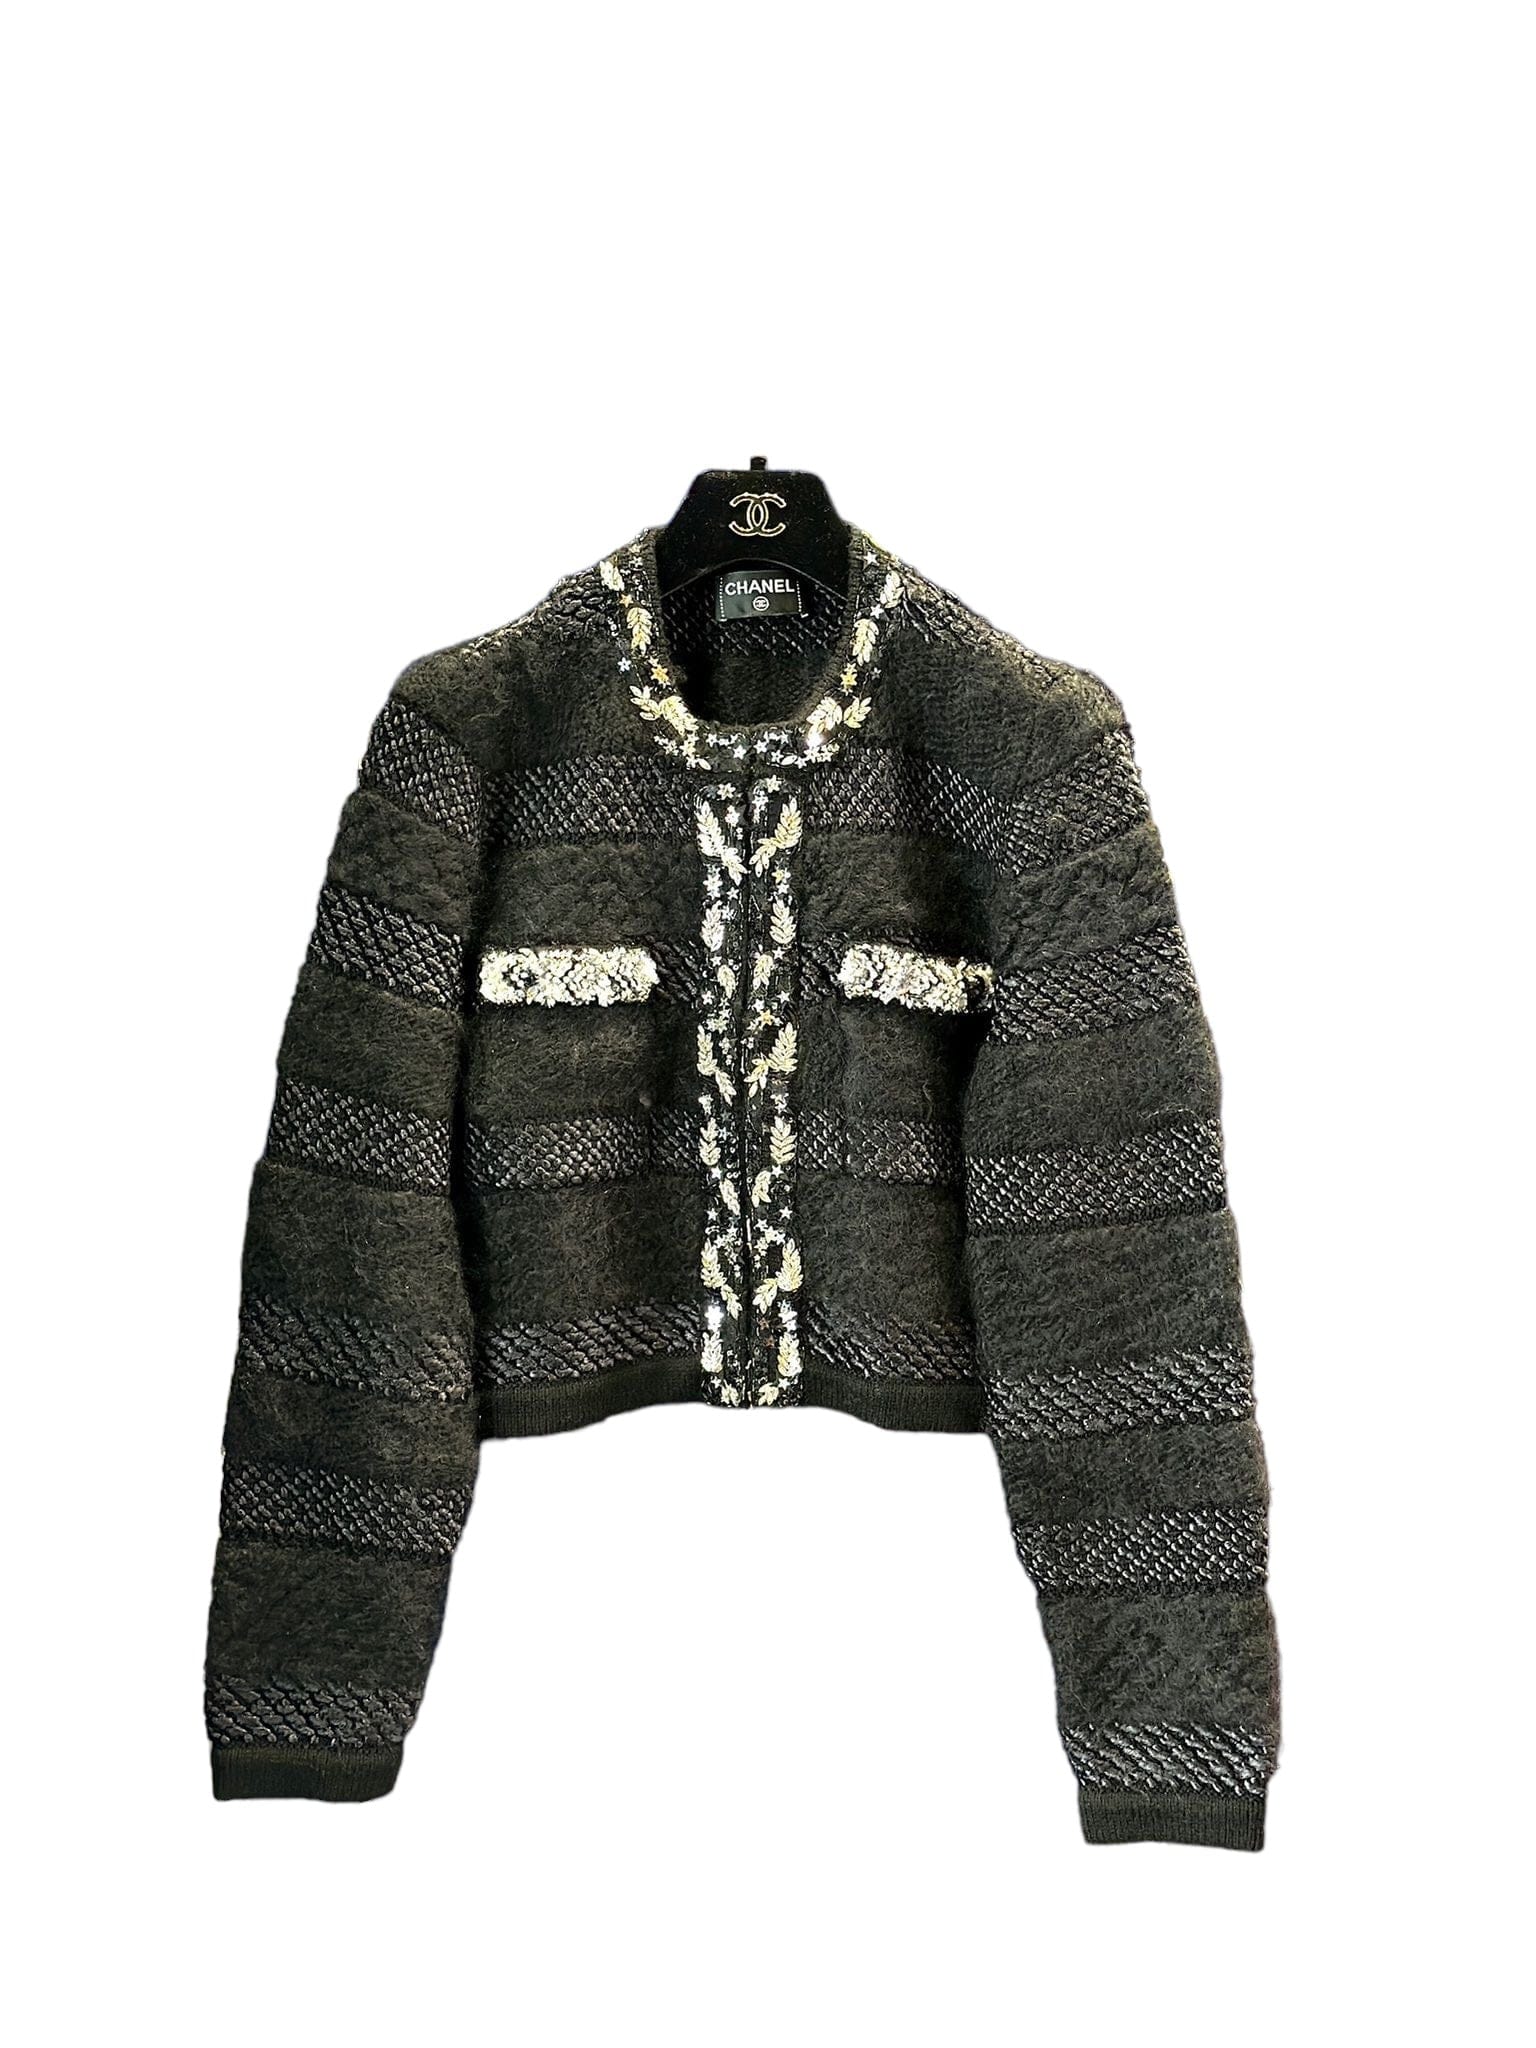 Chanel Chanel 2020 Chanel Black Sequin Jacket #34